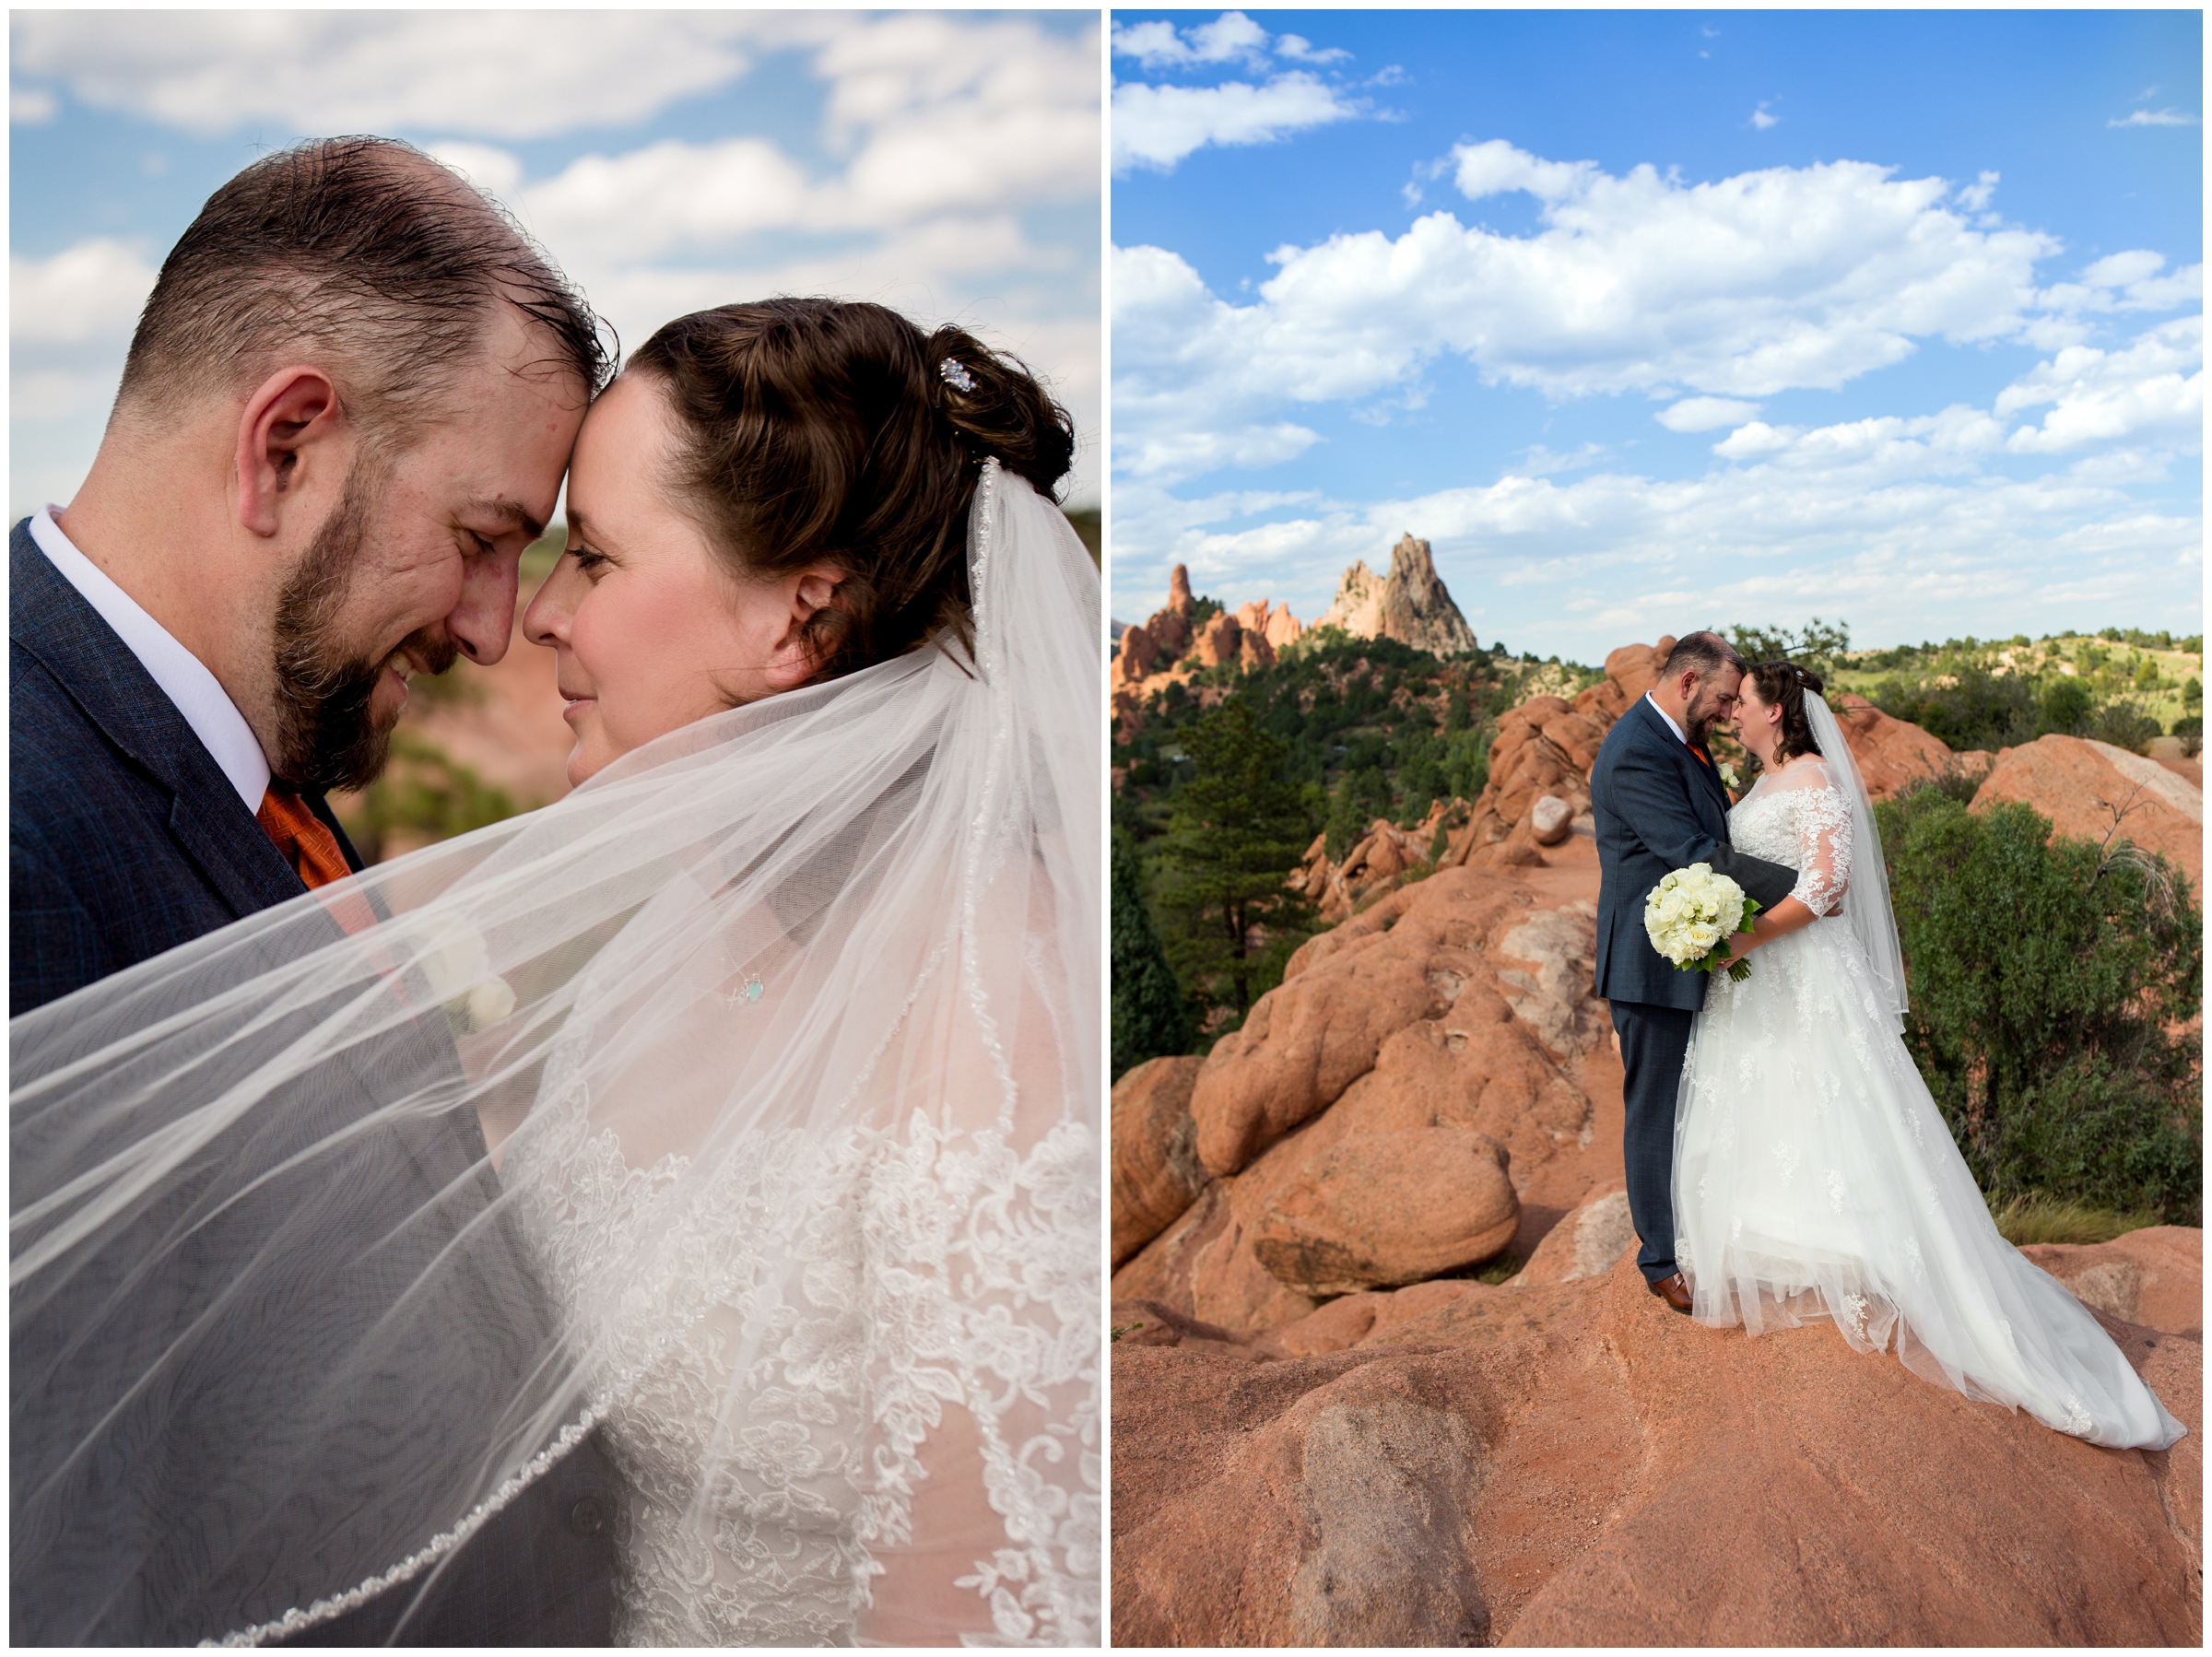 Colorado Springs wedding photography at High Point Overlook Garden of the Gods Park 